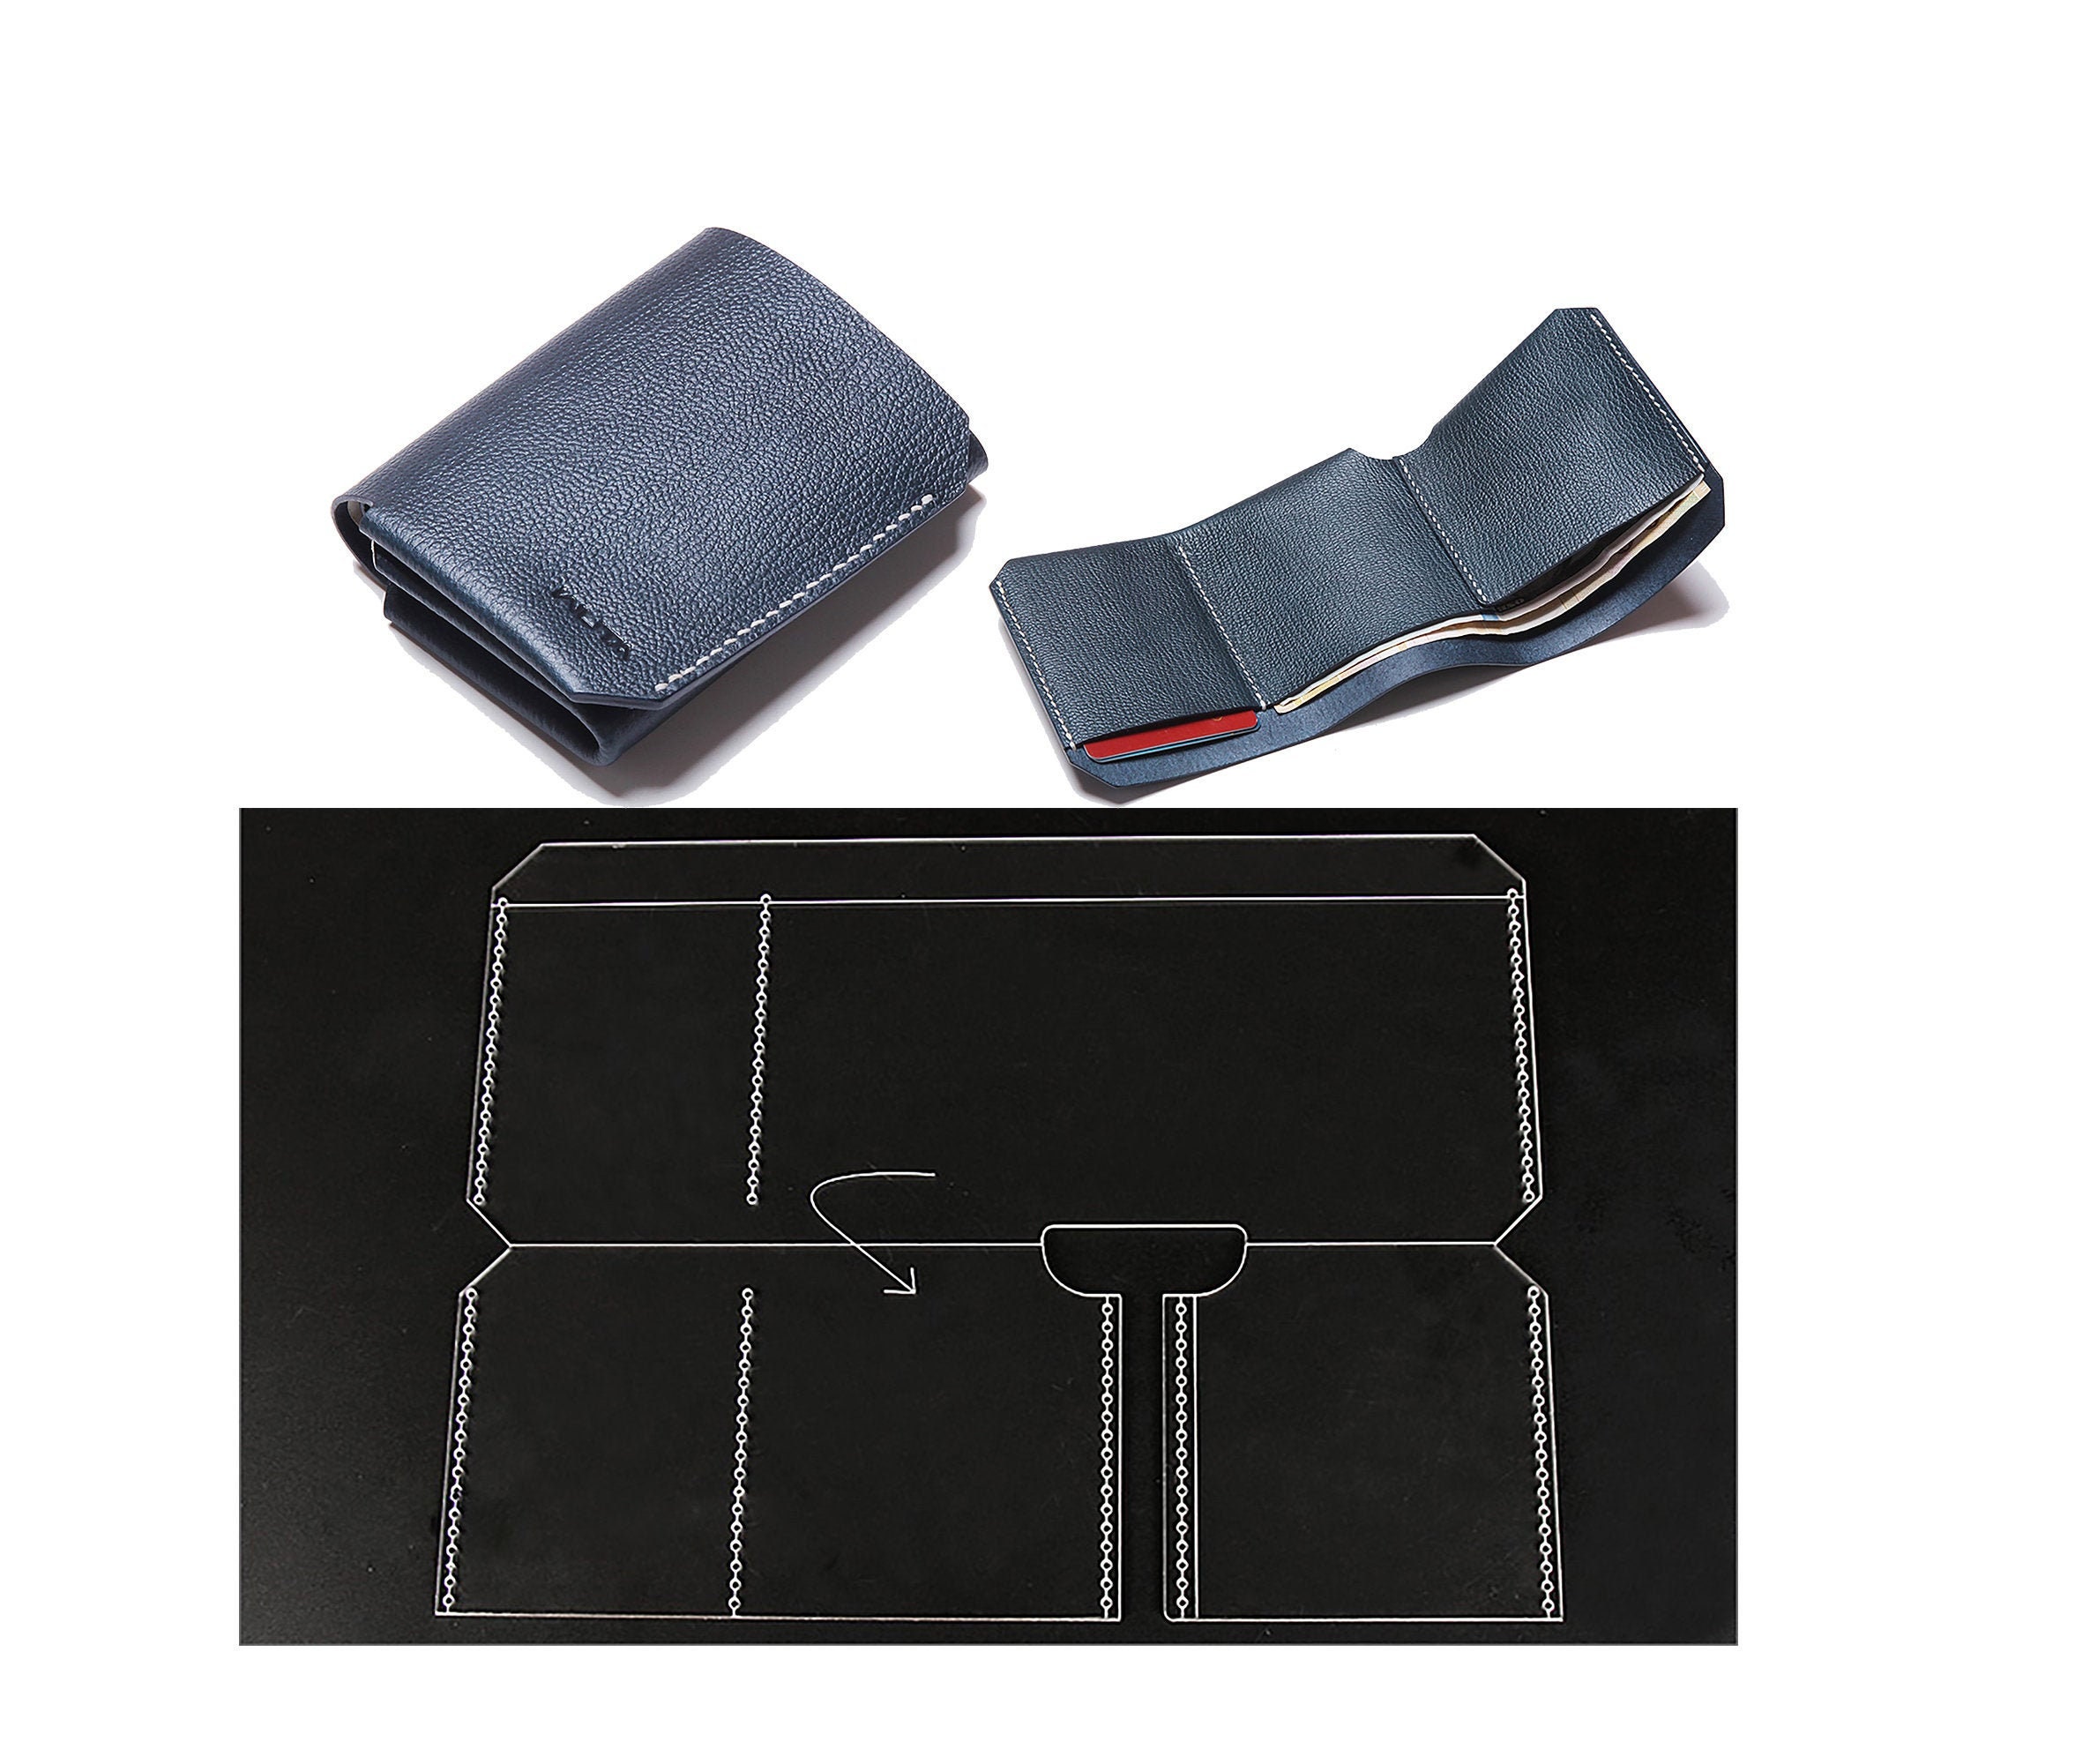 Card Wallet/card Holder Leather Cutting Dies/acrylic Pattern/kraft